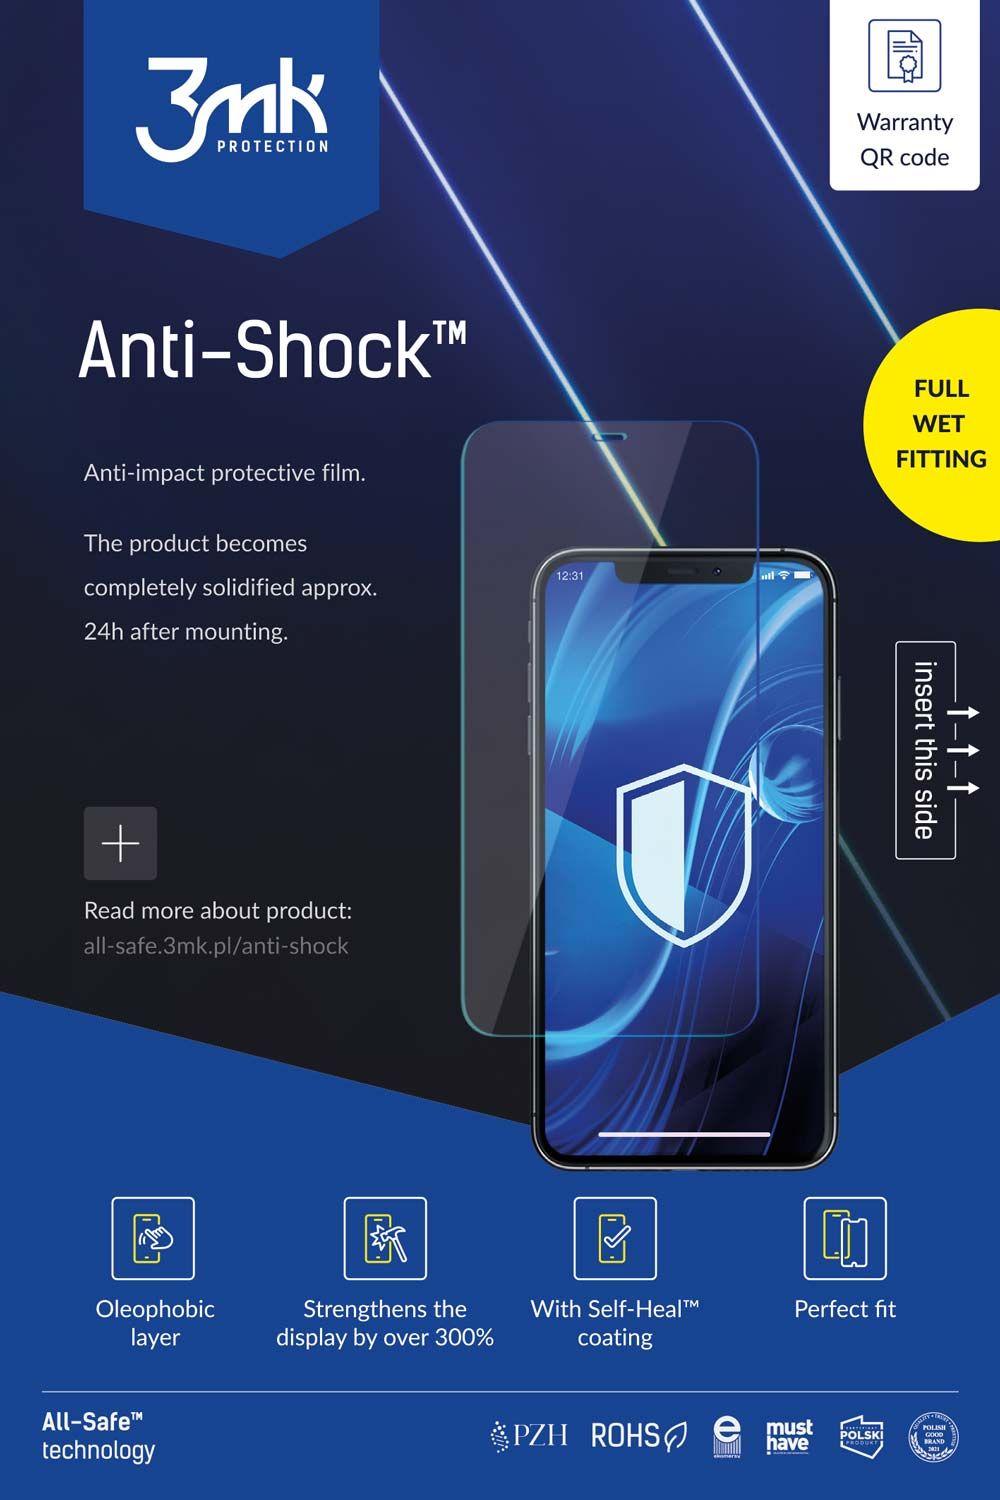 3MK Ochranná fólie All-Safe - AIO Anti-Shock Phone Full Wet Fittting 5ks